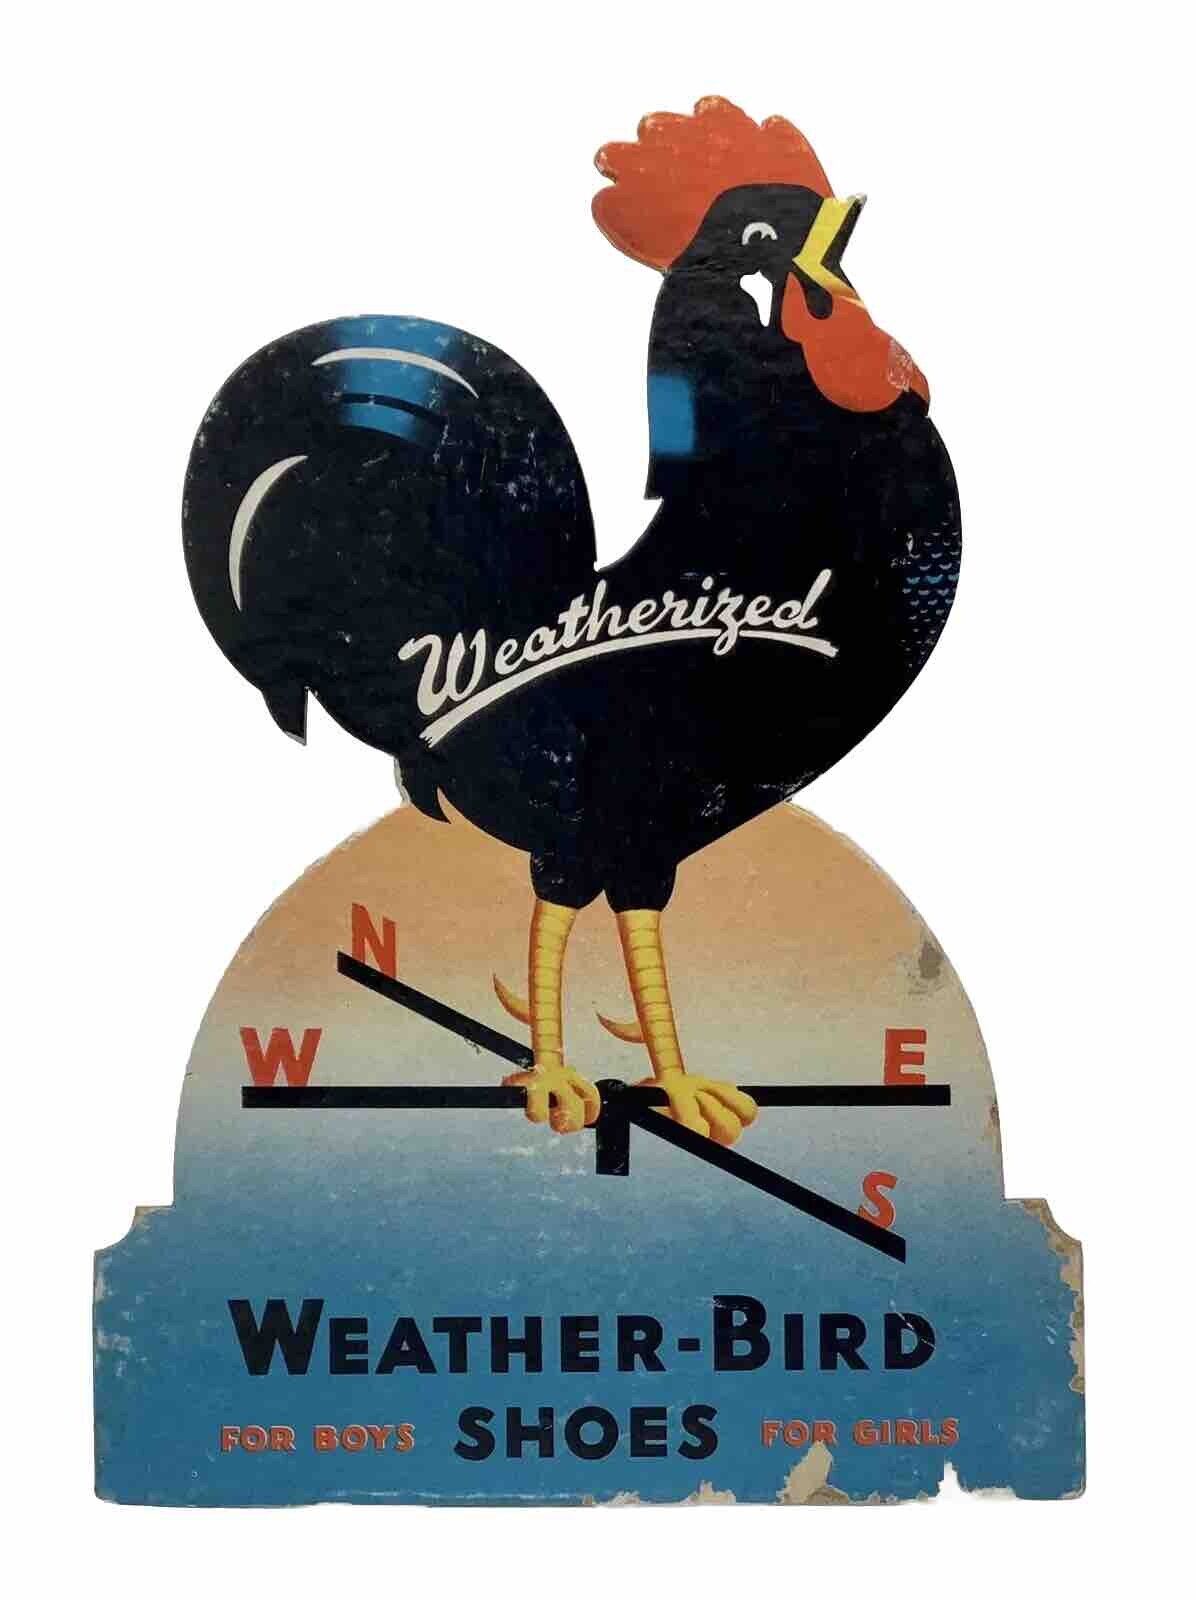 Weatherbird Weather-bird Shoes Cardboard Countertop Advertising Display 8-1/8”